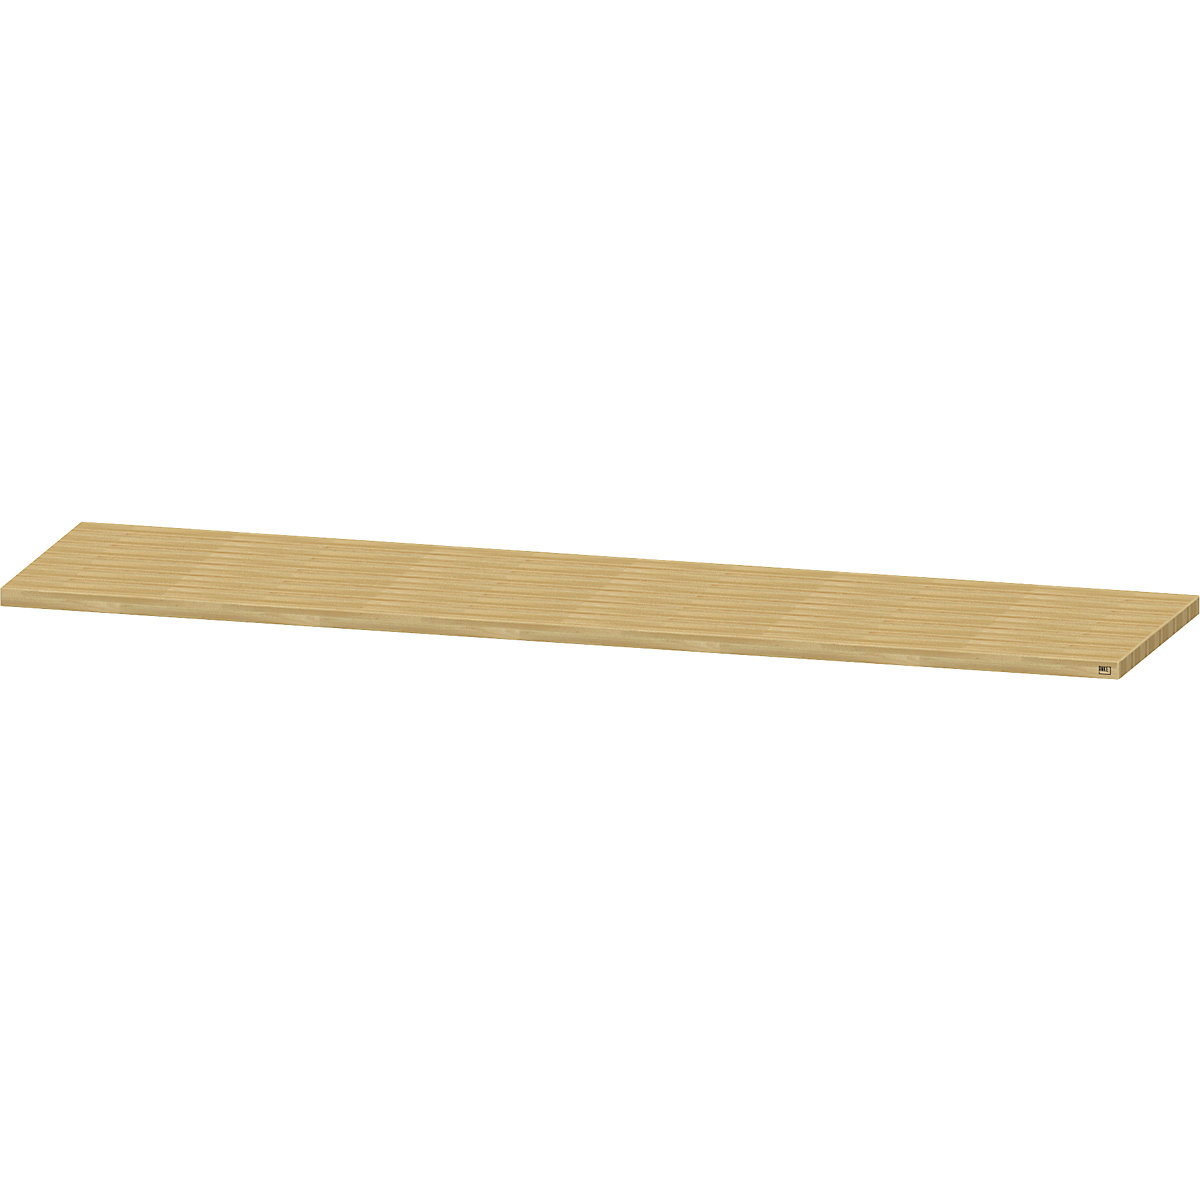 Worktop for workbench – ANKE, solid copper beech worktop, width 2800 mm, thickness 50 mm-3